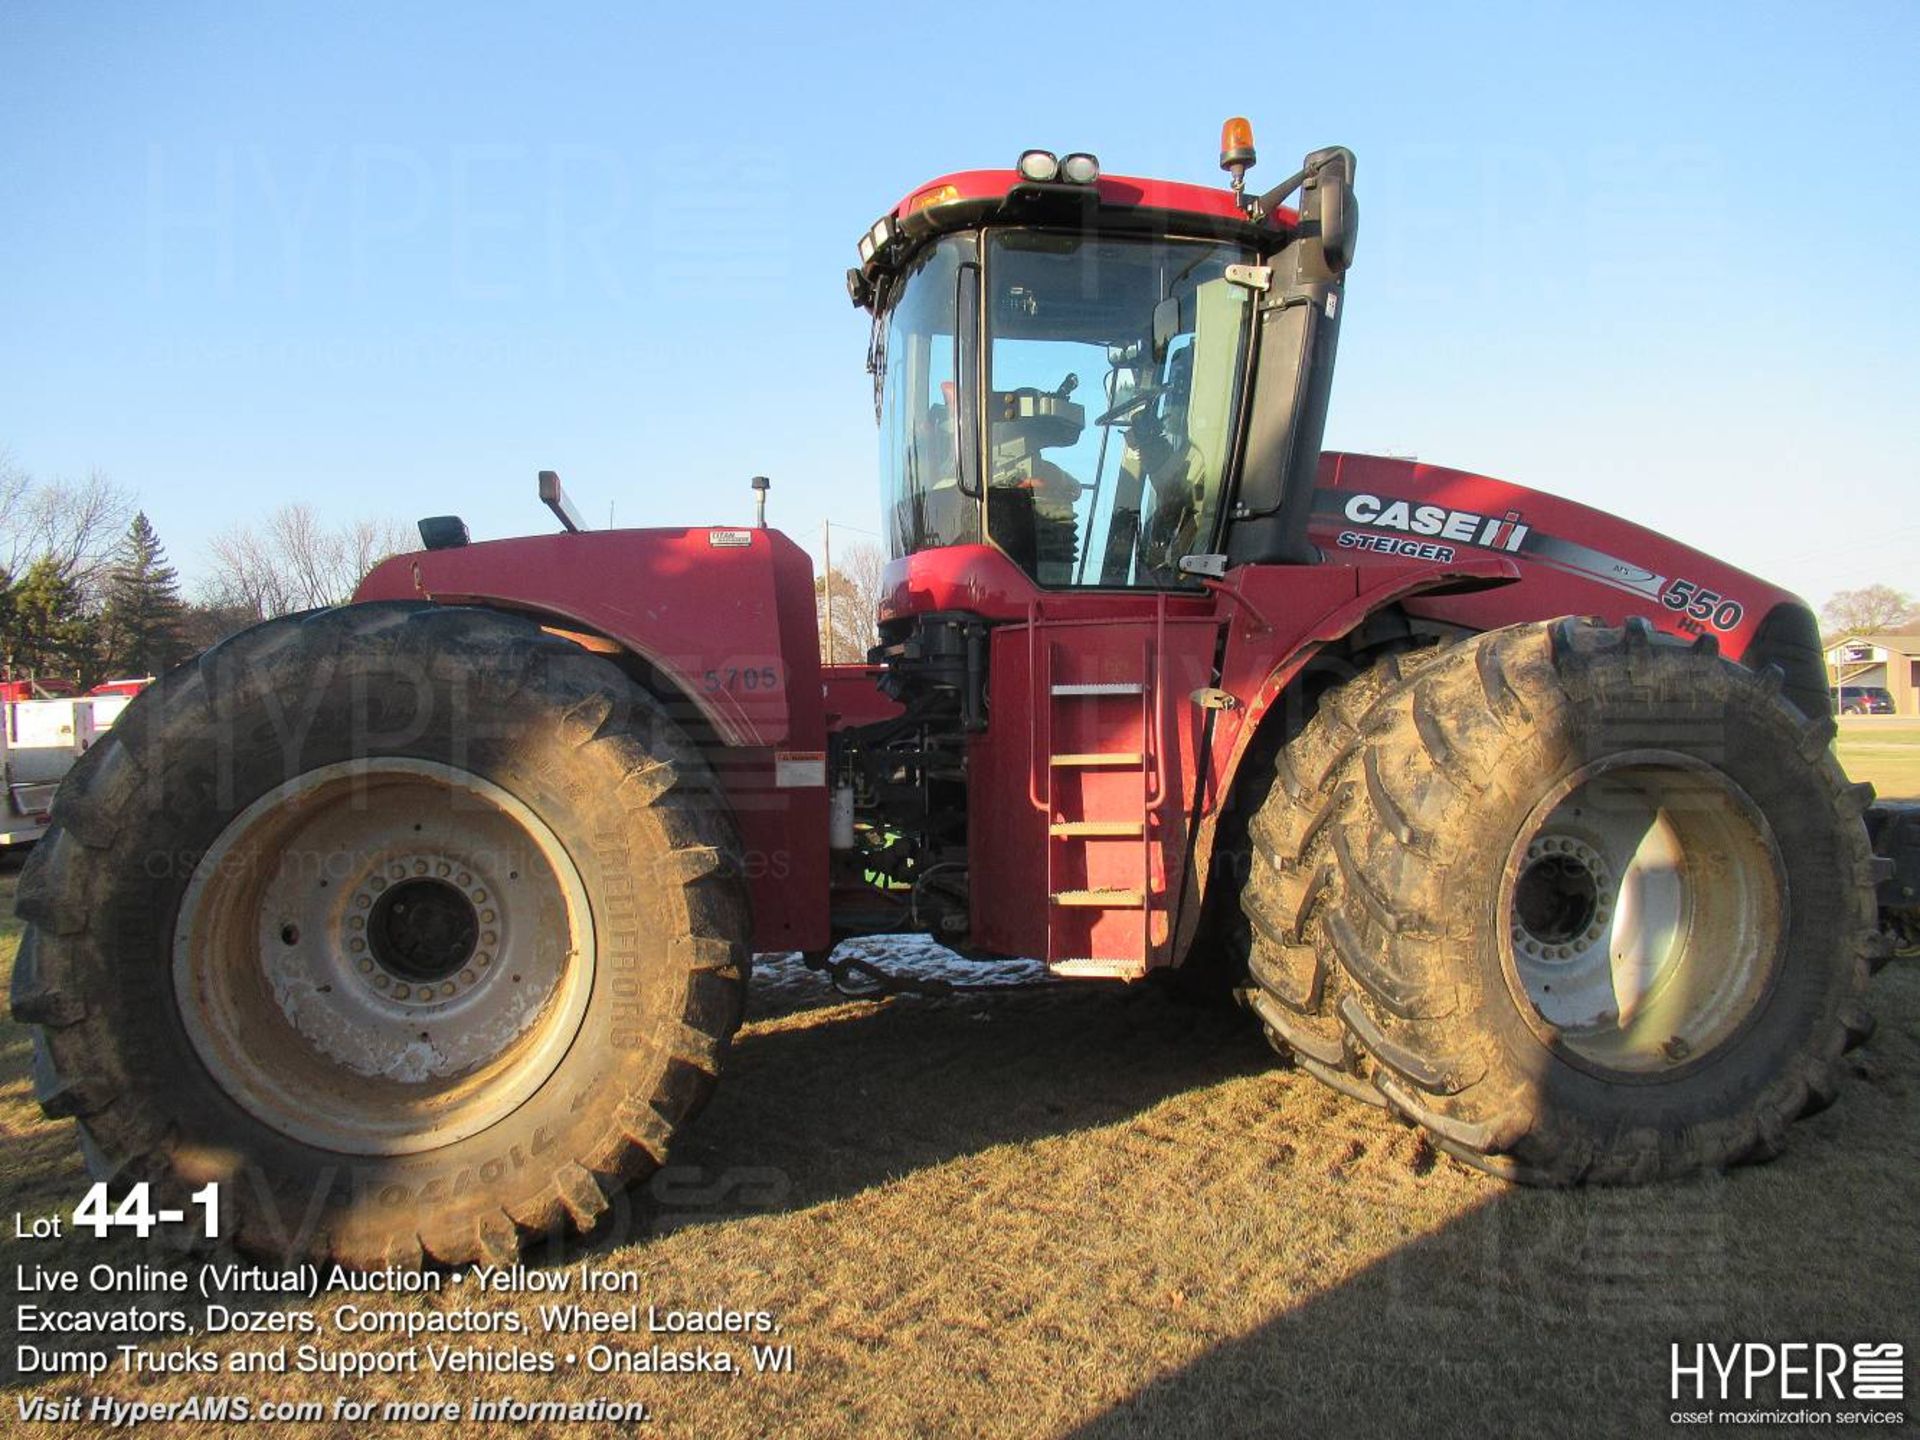 2013 Case IH Steiger 550HD ag tractor